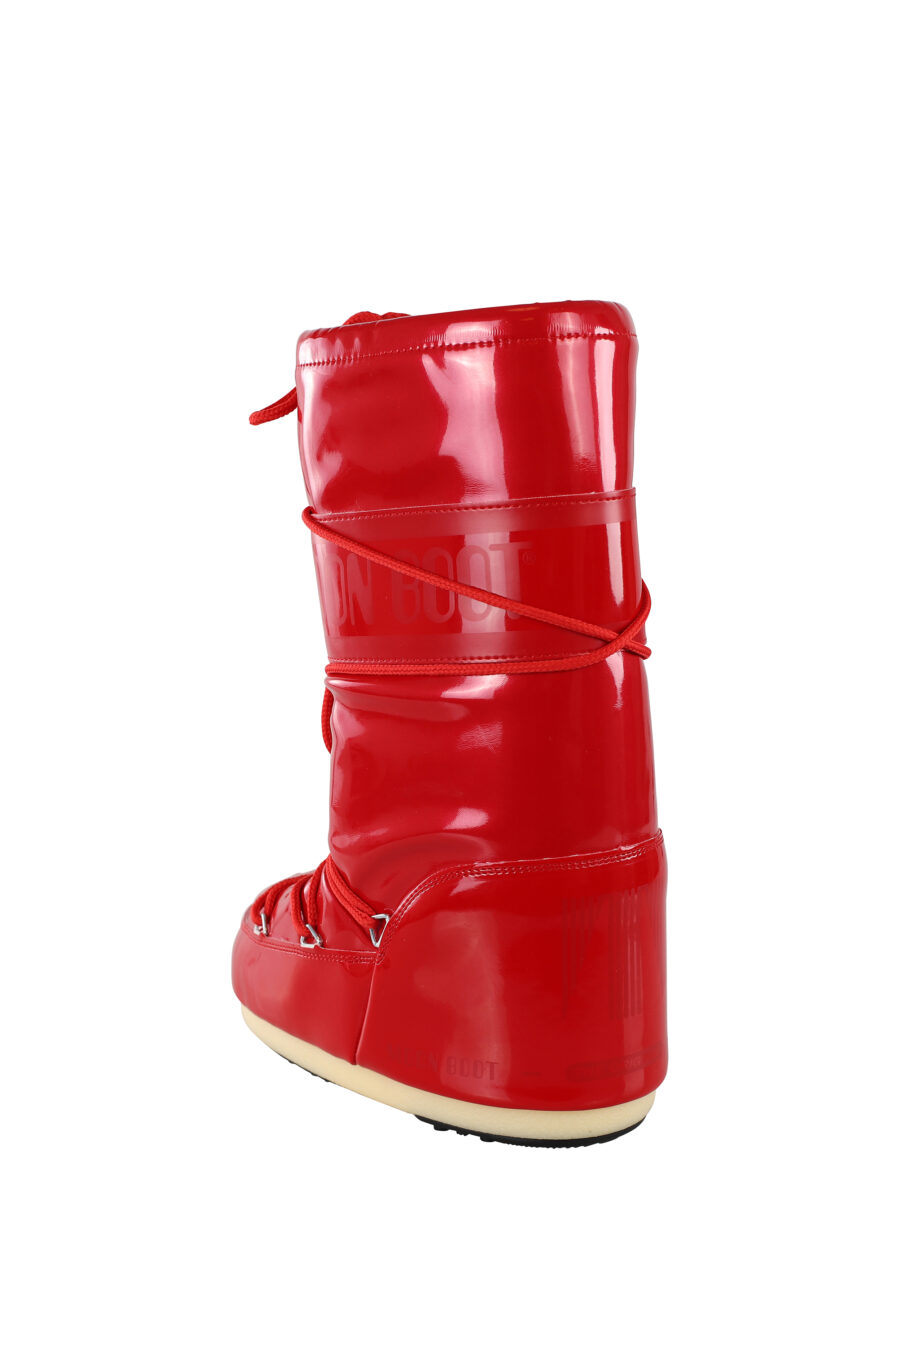 Botas de nieve rojas con logo monocromático - IMG 6750